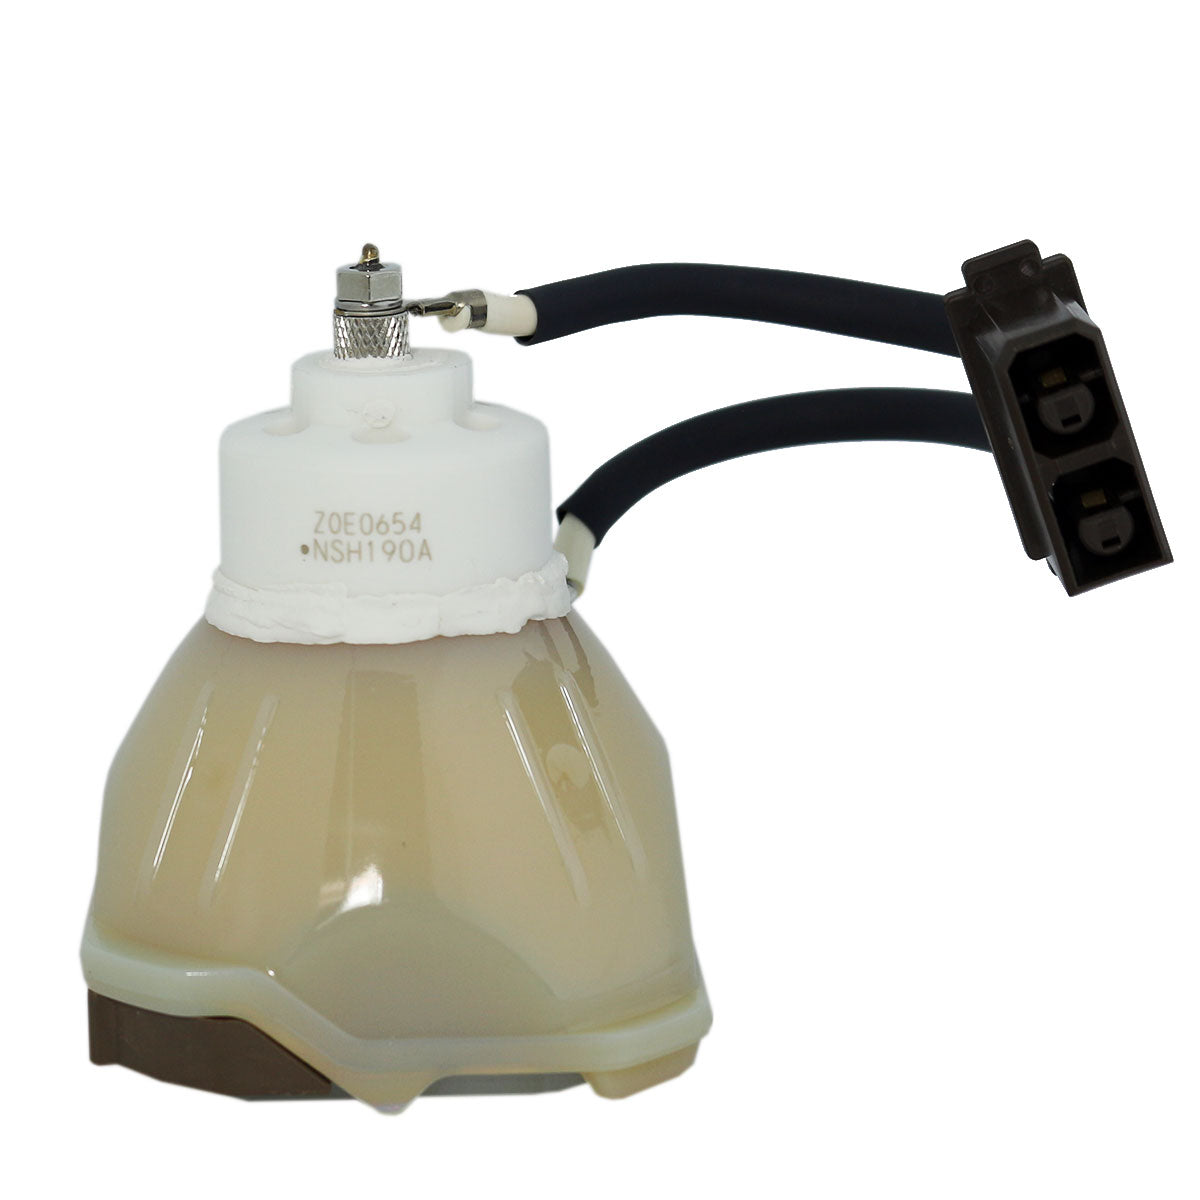 Ask Proxima LAMP-017 Ushio Projector Bare Lamp